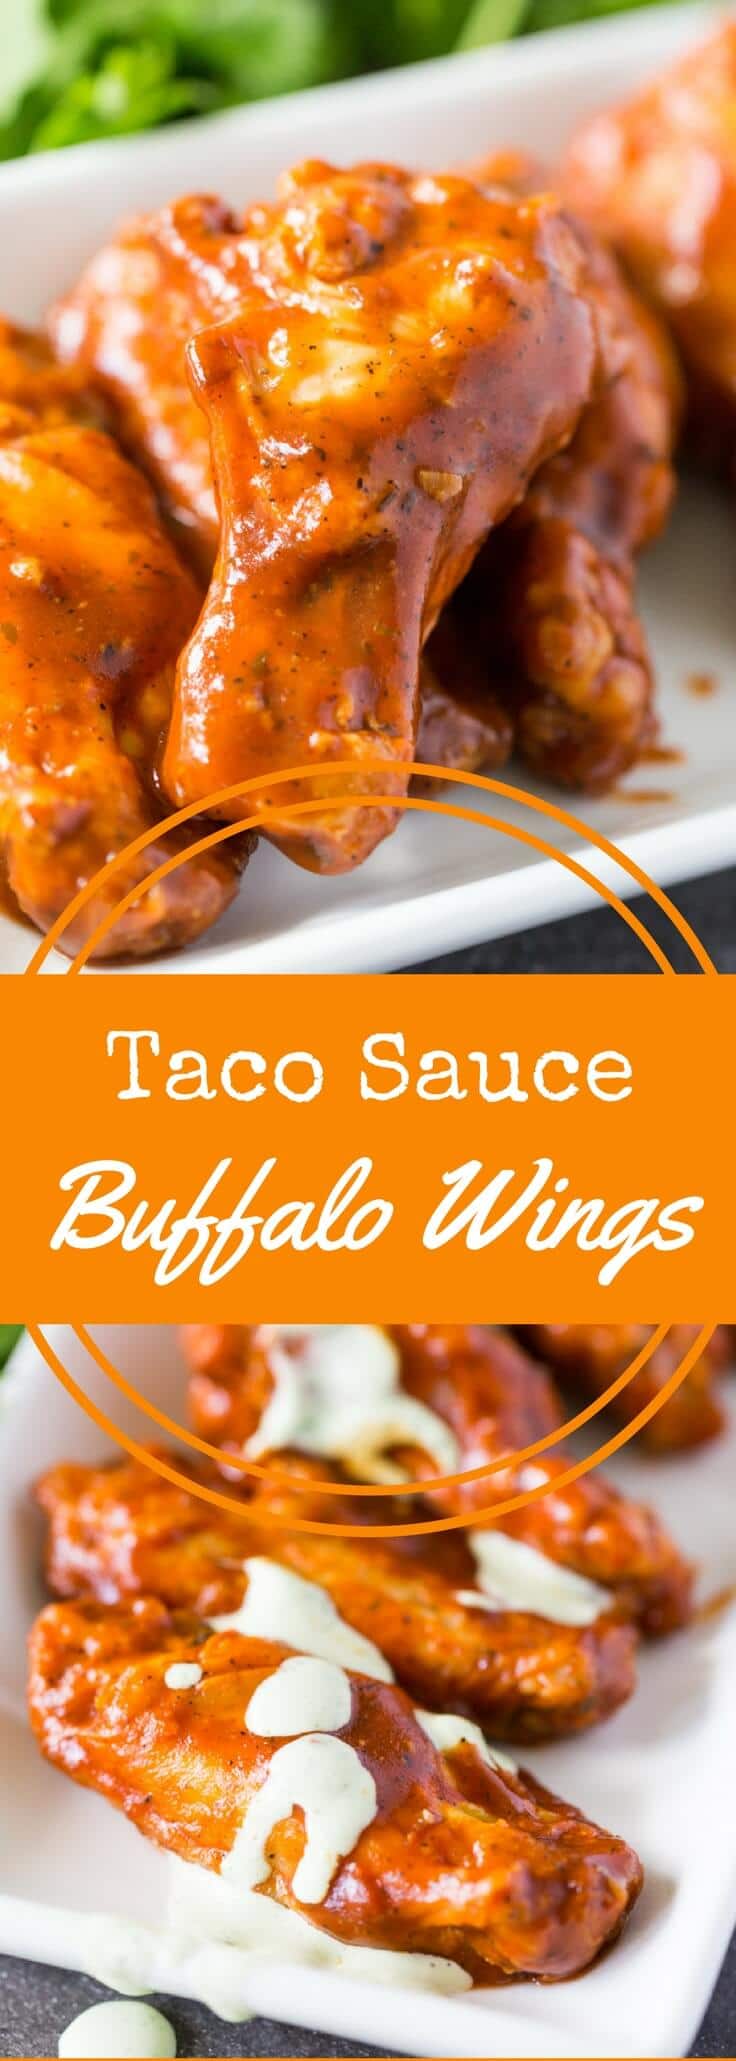 Taco Sauce Buffalo Wings